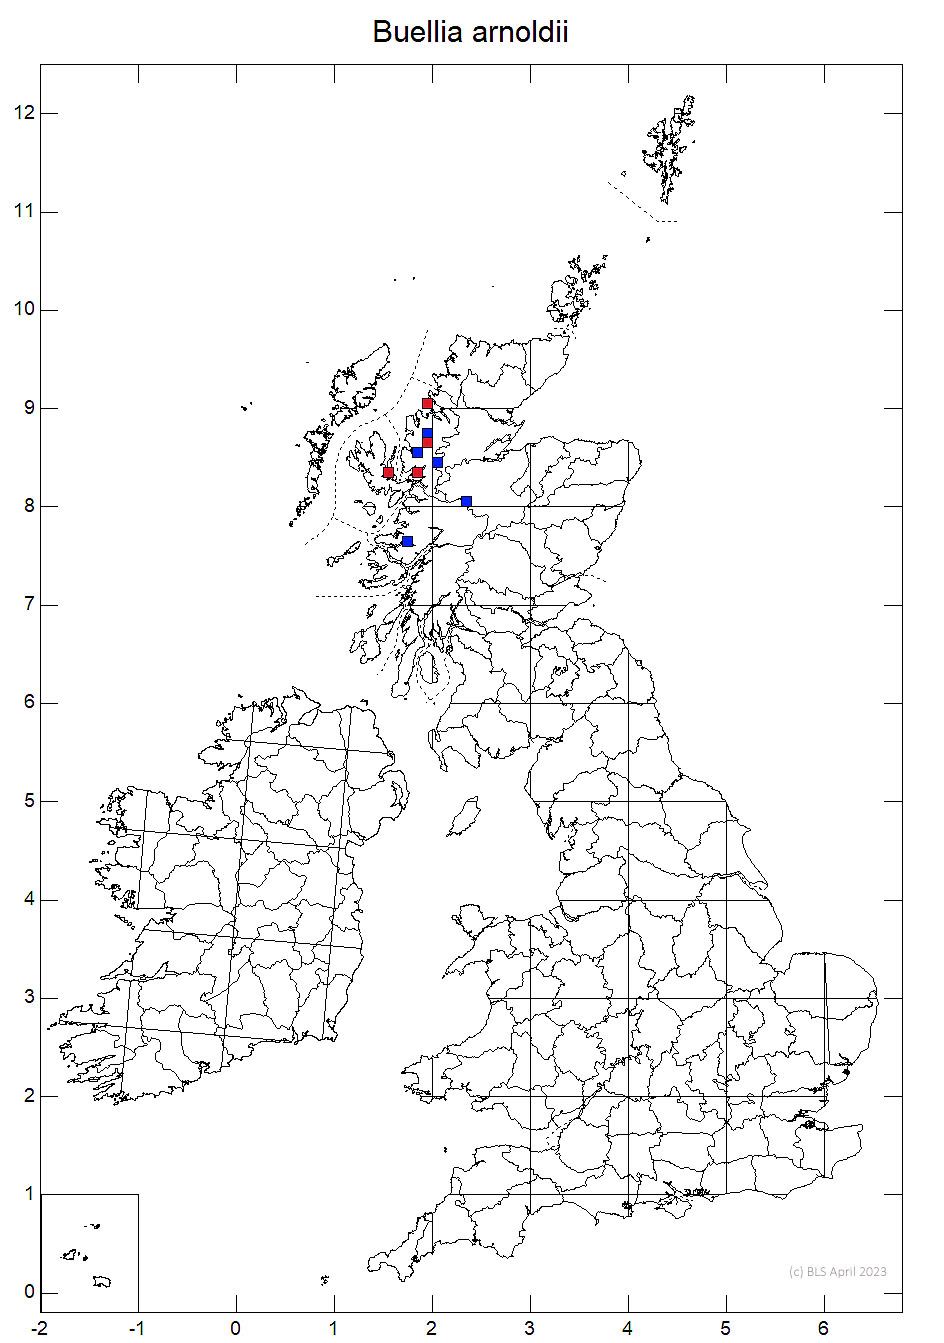 Buellia arnoldii 10km sq distribution map